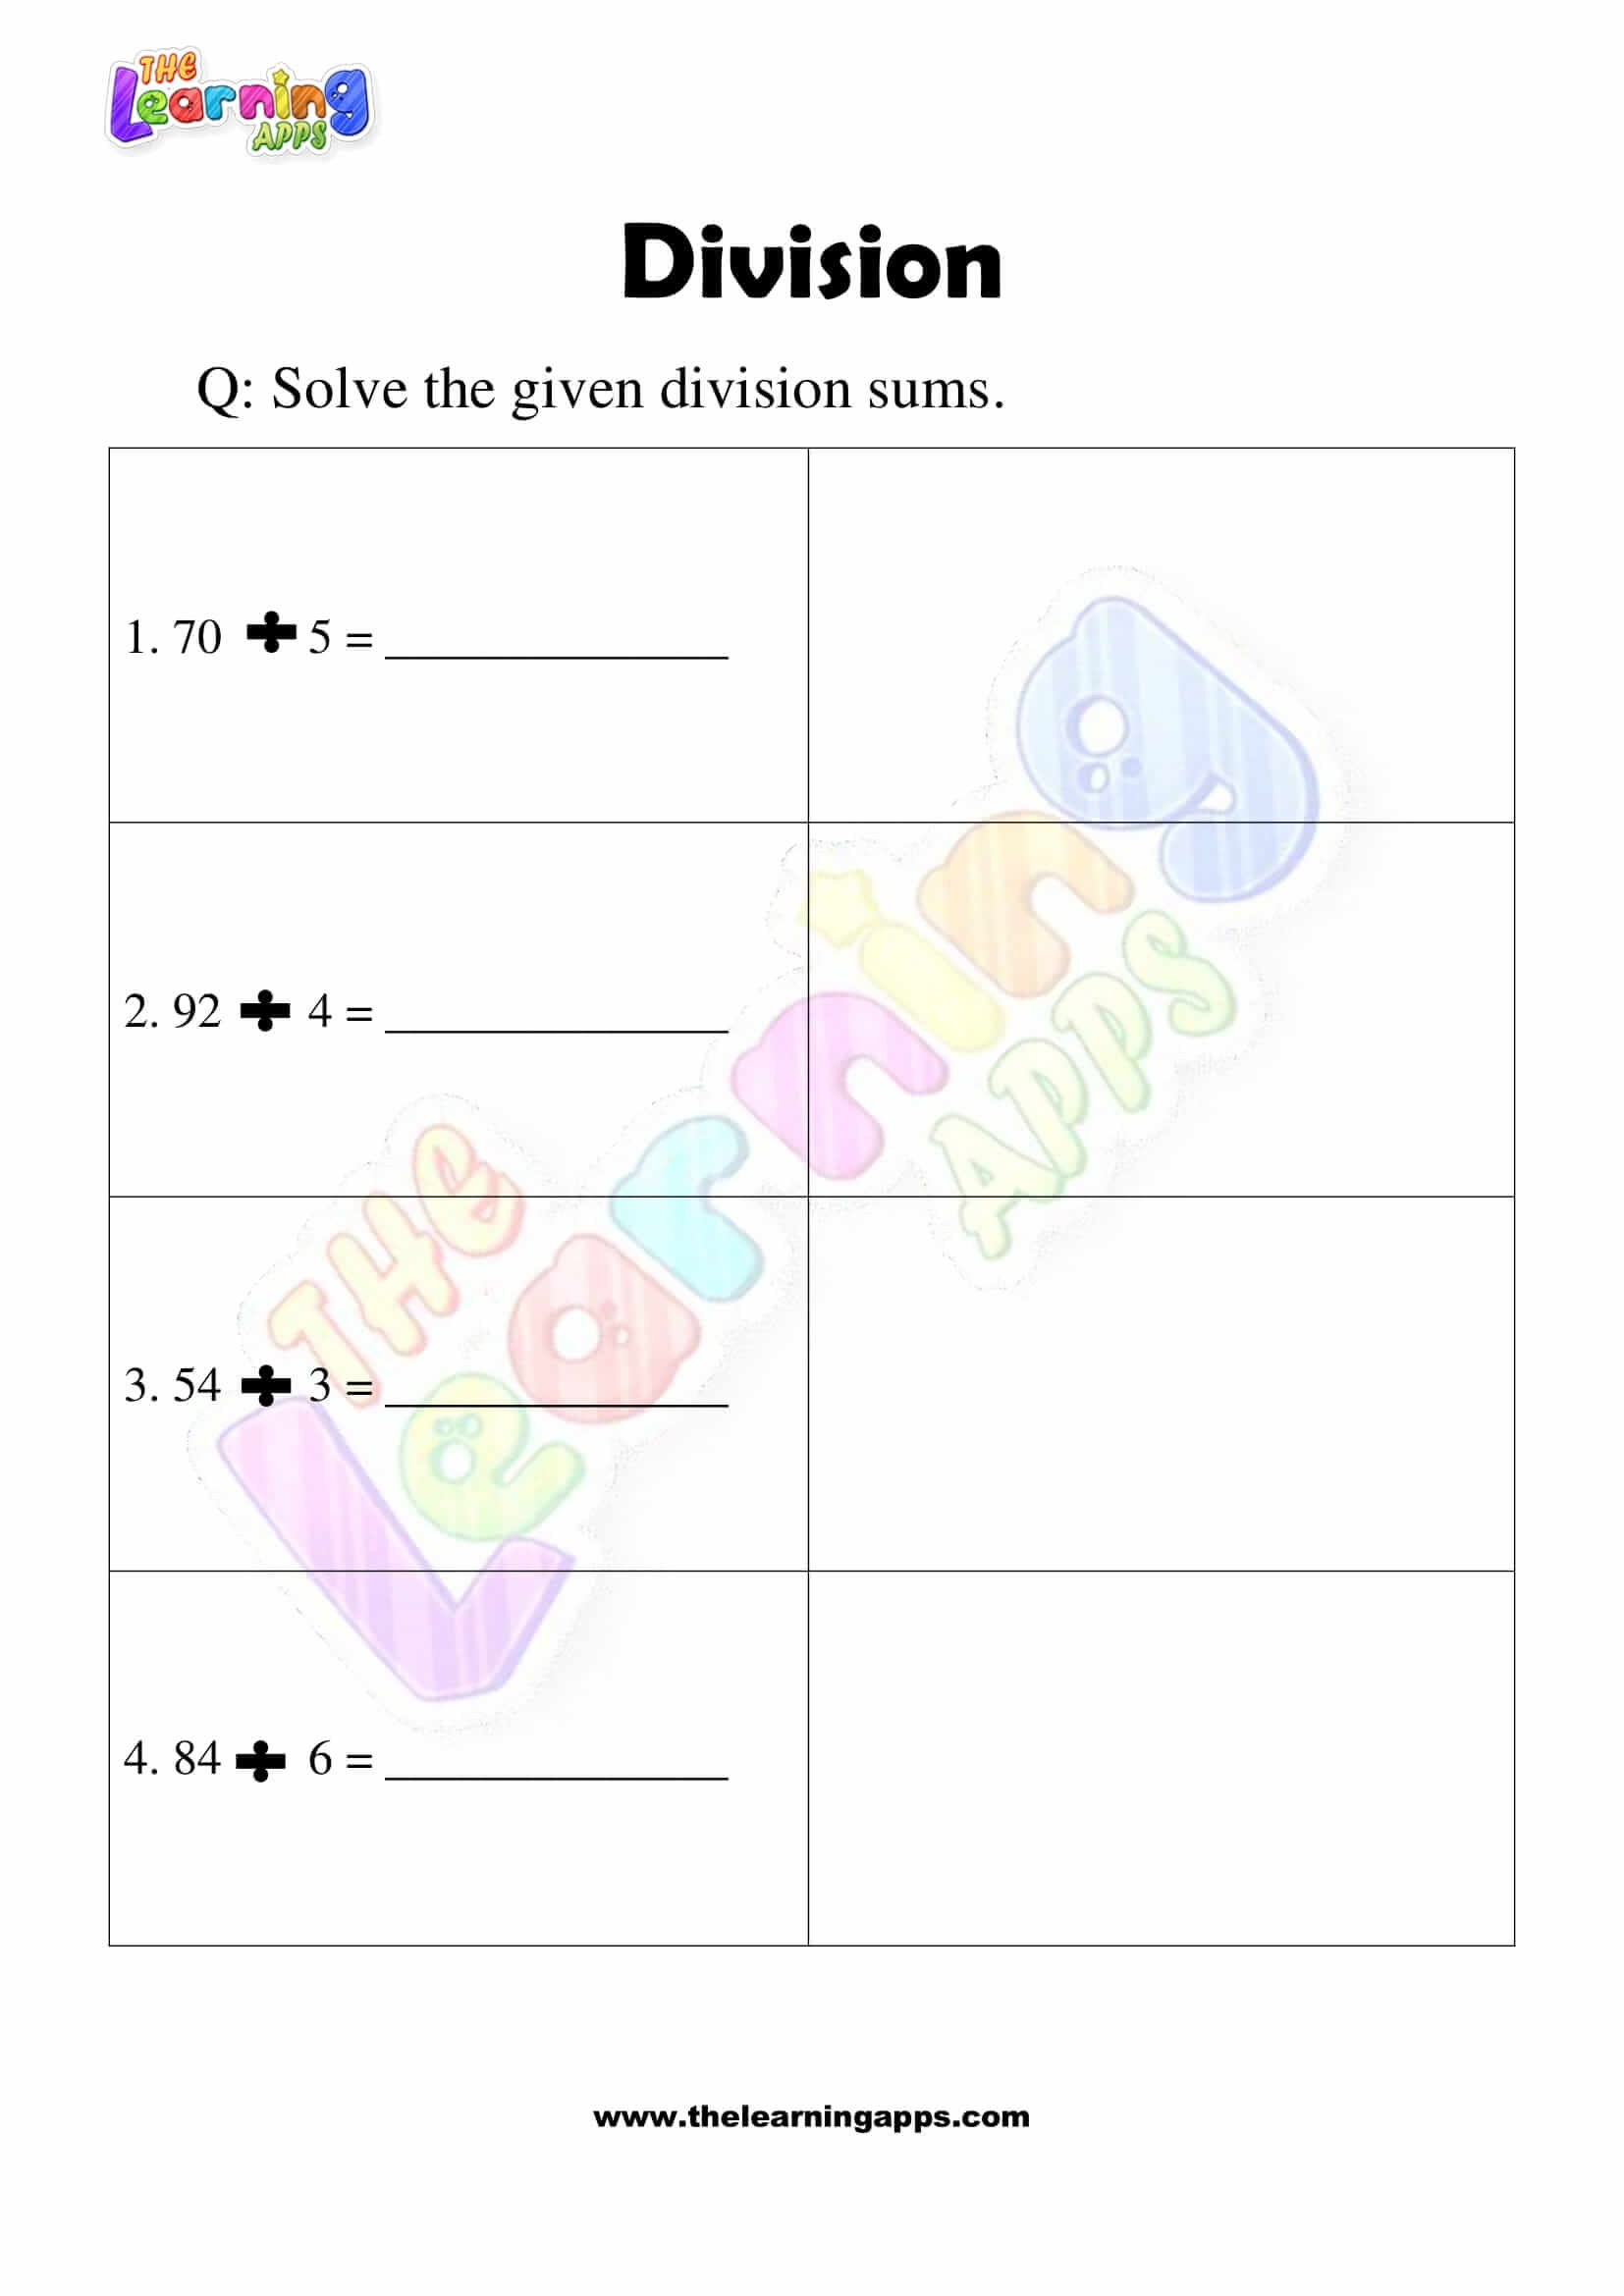 Division Worksheet - Grade 3 - Activity 5